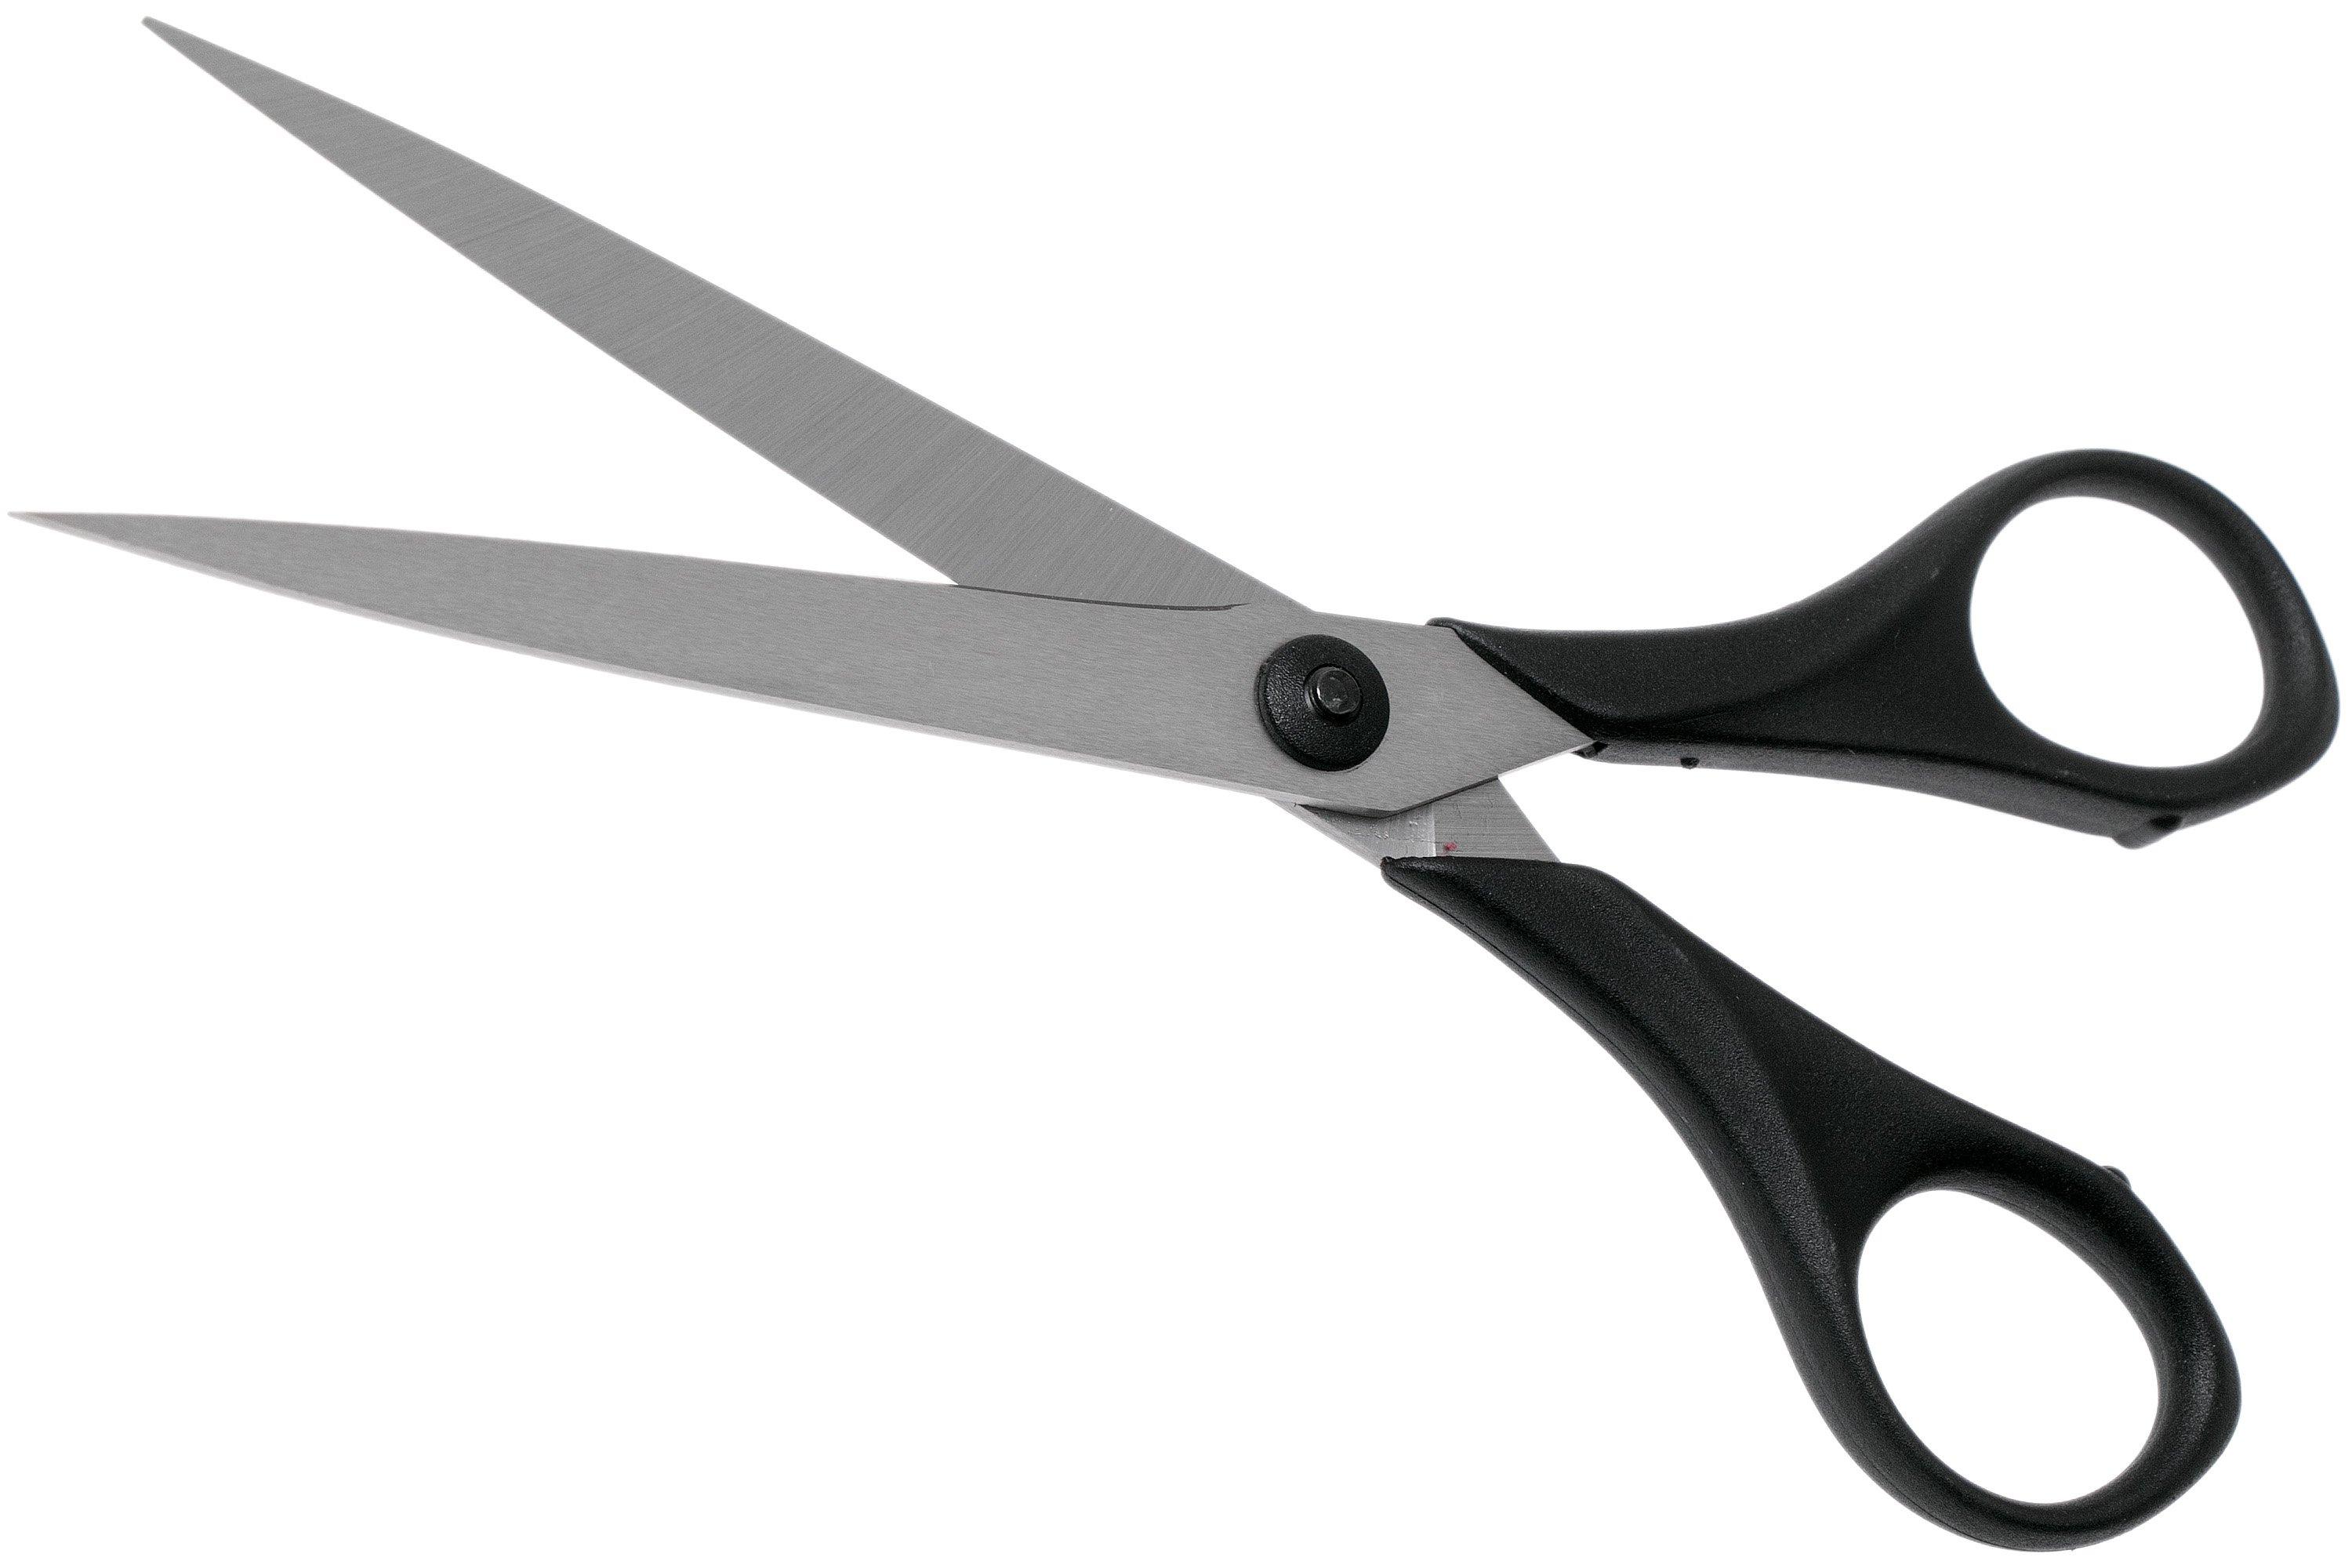 Victorinox 8.0987.19 household scissors 18 cm | Advantageously shopping at | Allzweckscheren